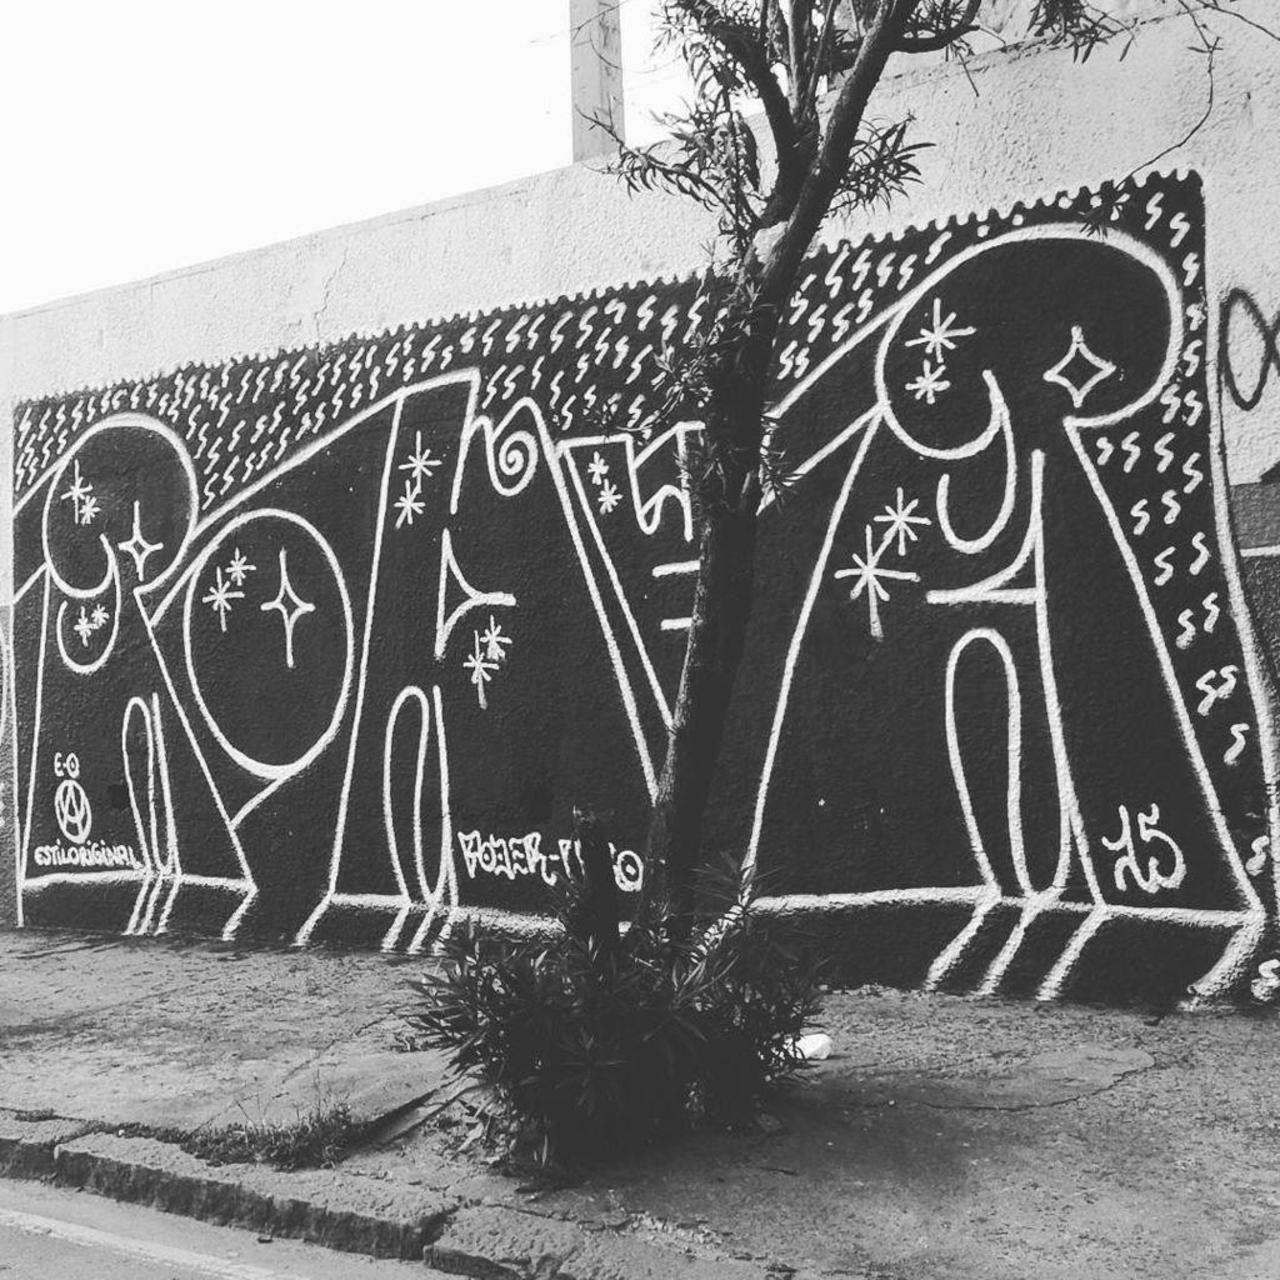 Cosme e Damião #poderafro #graffiti #streetartrio #artistasurbanoscrew #rjvandal #streetart by artistasurbanoscrew http://t.co/pfCciUtp1G